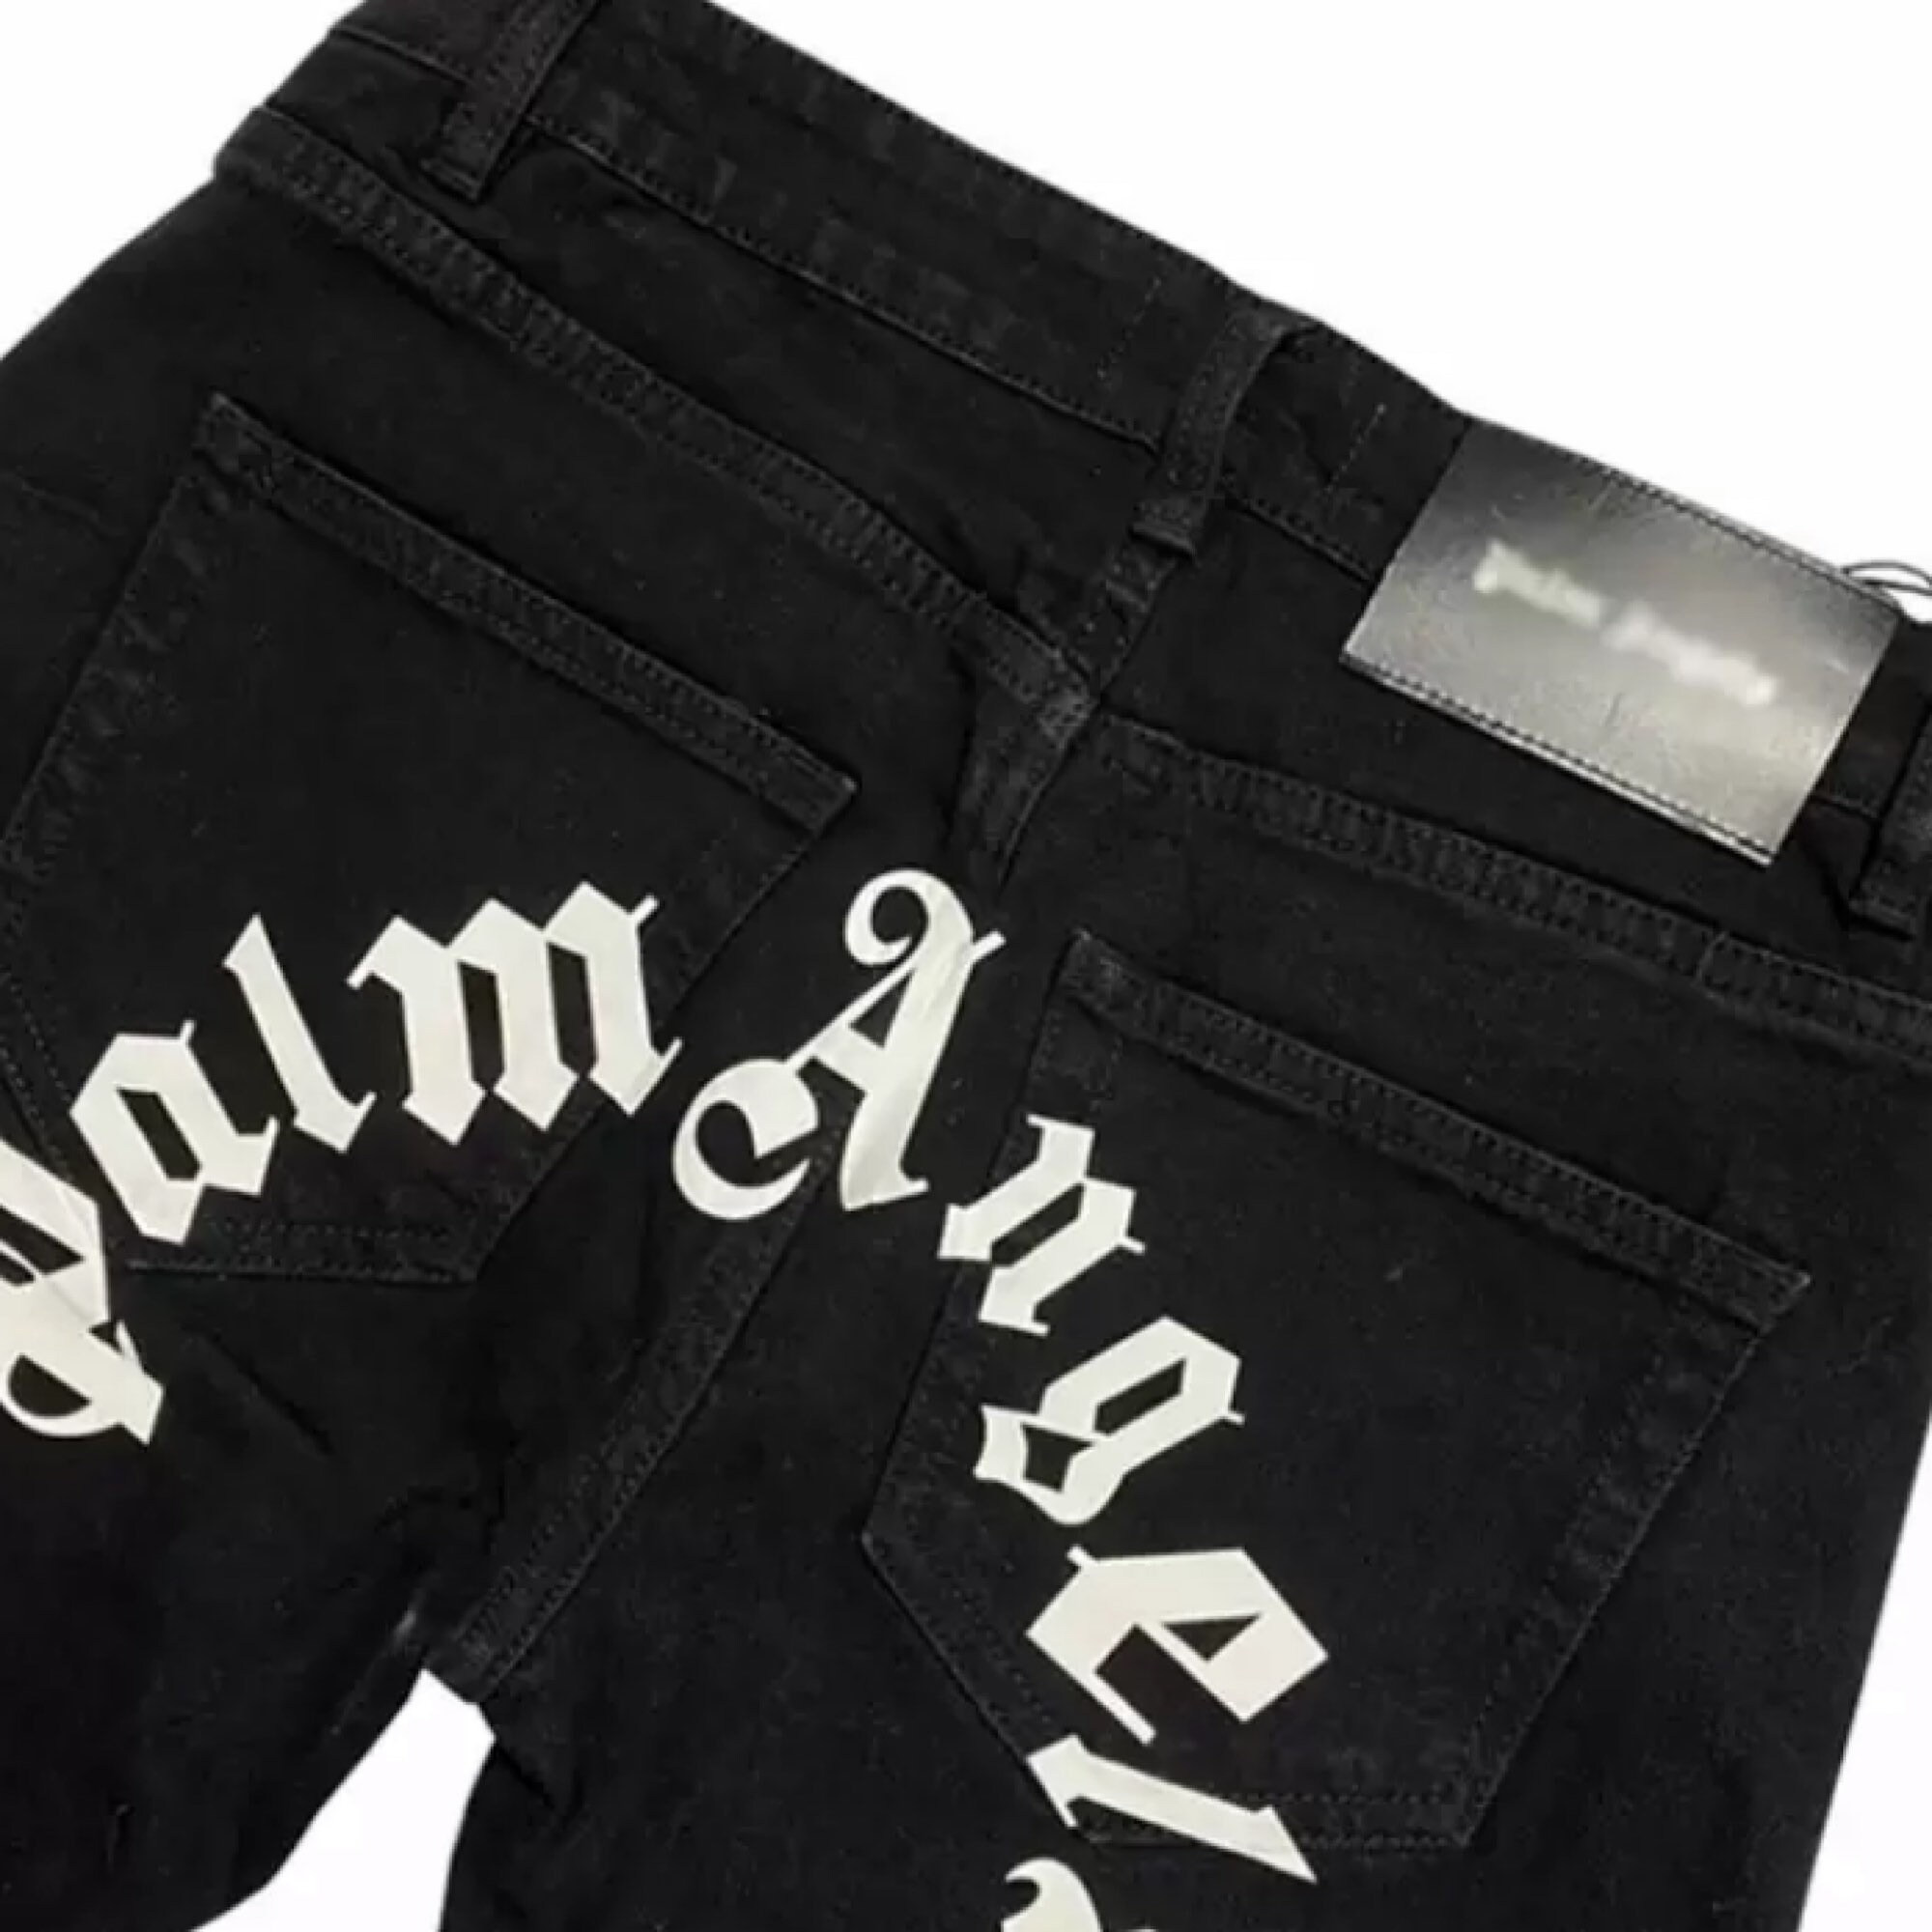 Custom Black Washed Vintage Style Denim Jeans with Black | Etsy